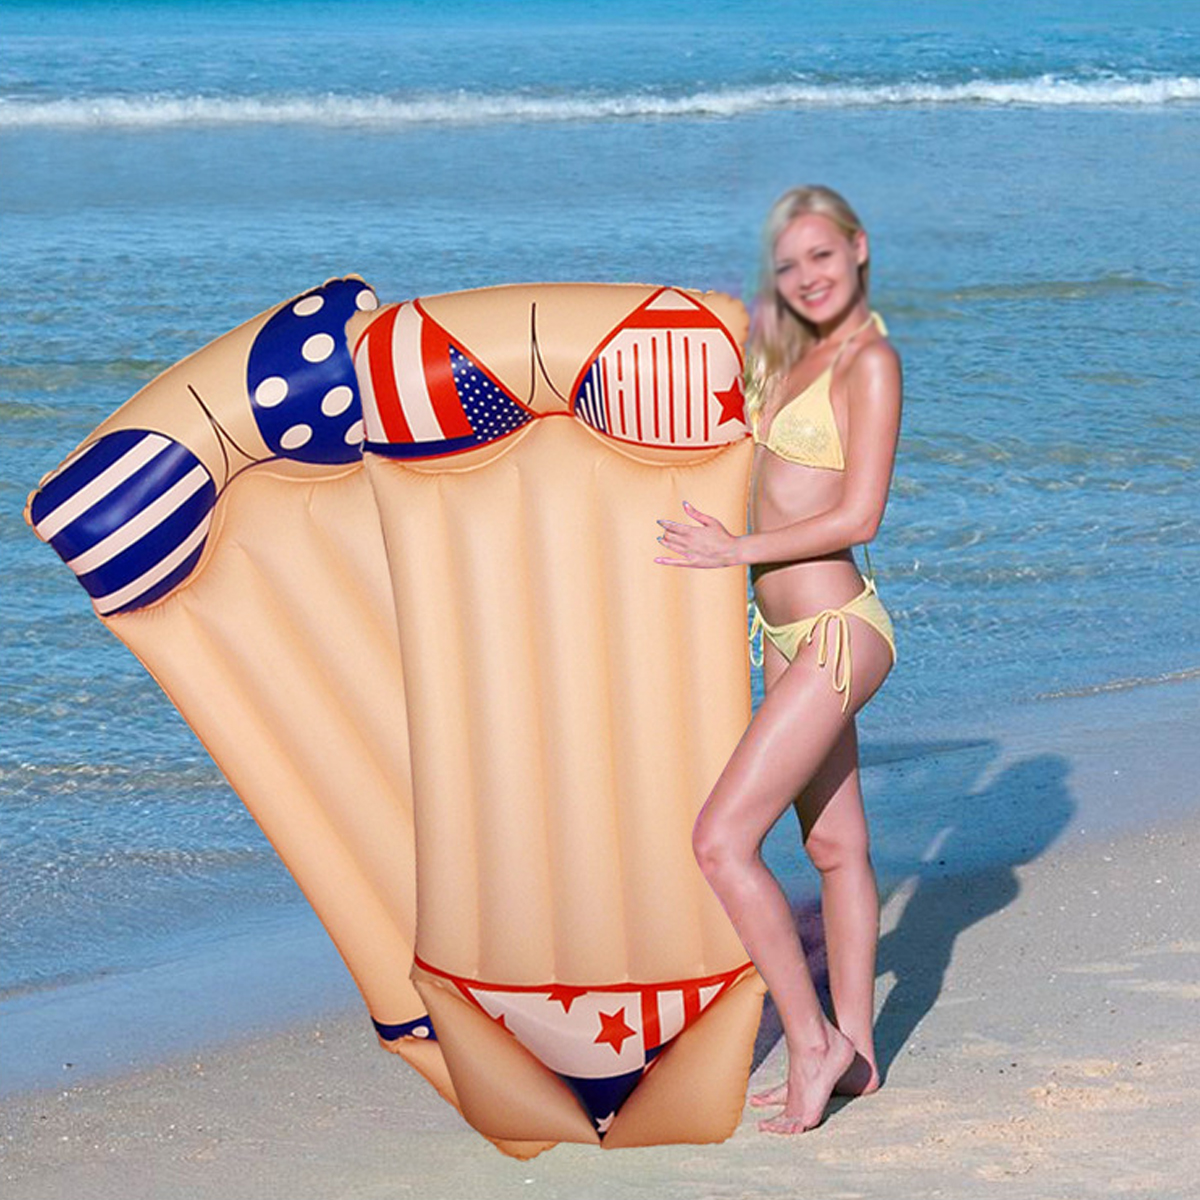 180x80cm-Inflatable-Air-Mat-Floating-Lounge-Water-Beach-Swimming-Pool-Bikini-Row-Pad-Bed-1243428